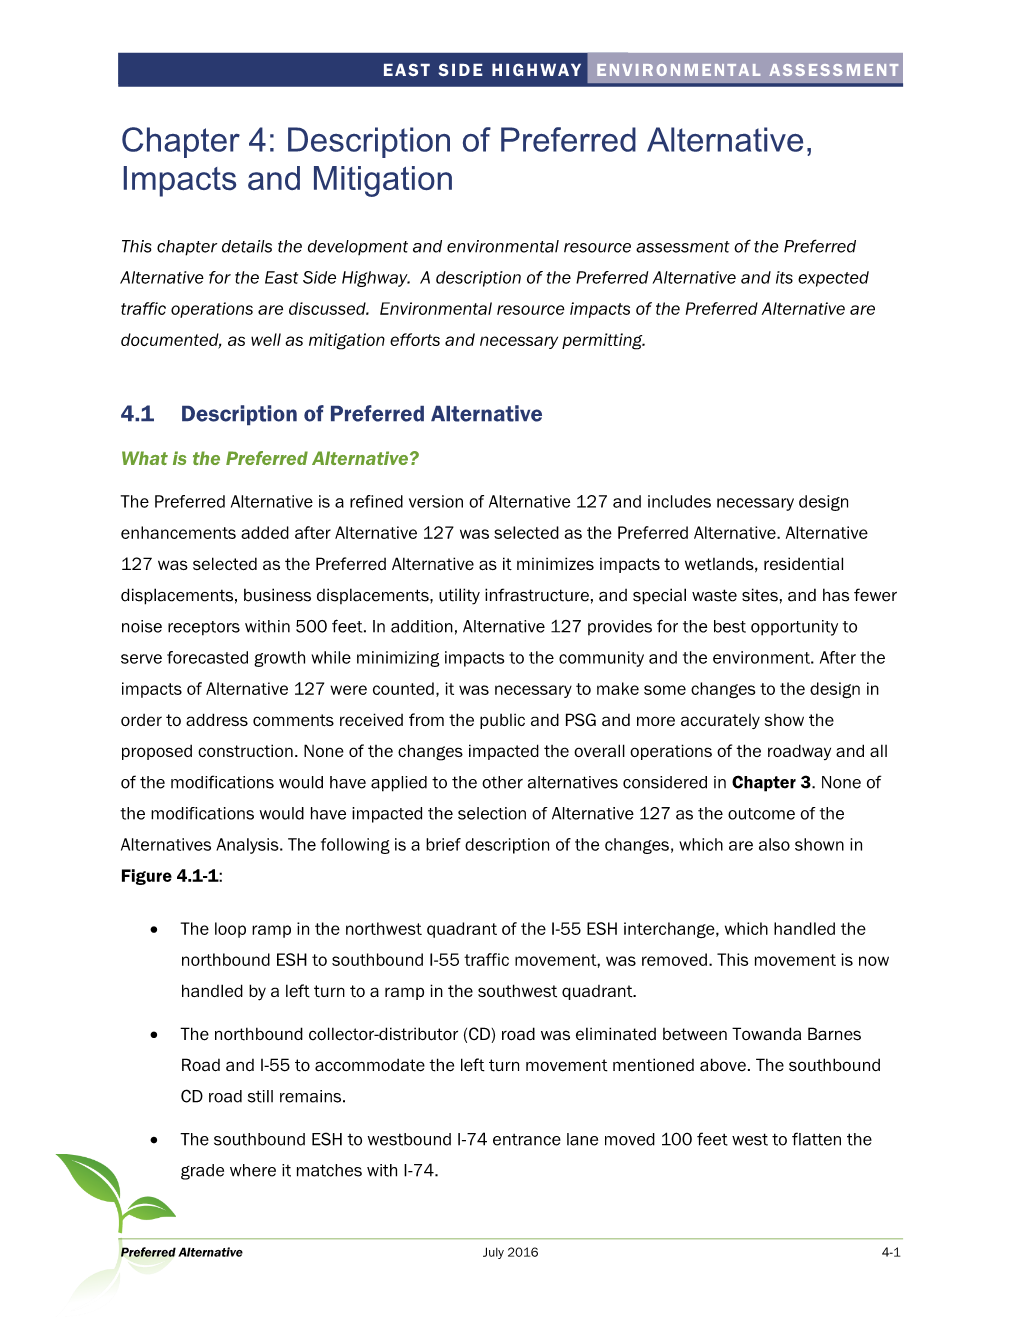 Chapter 4: Description of Preferred Alternative, Impacts and Mitigation